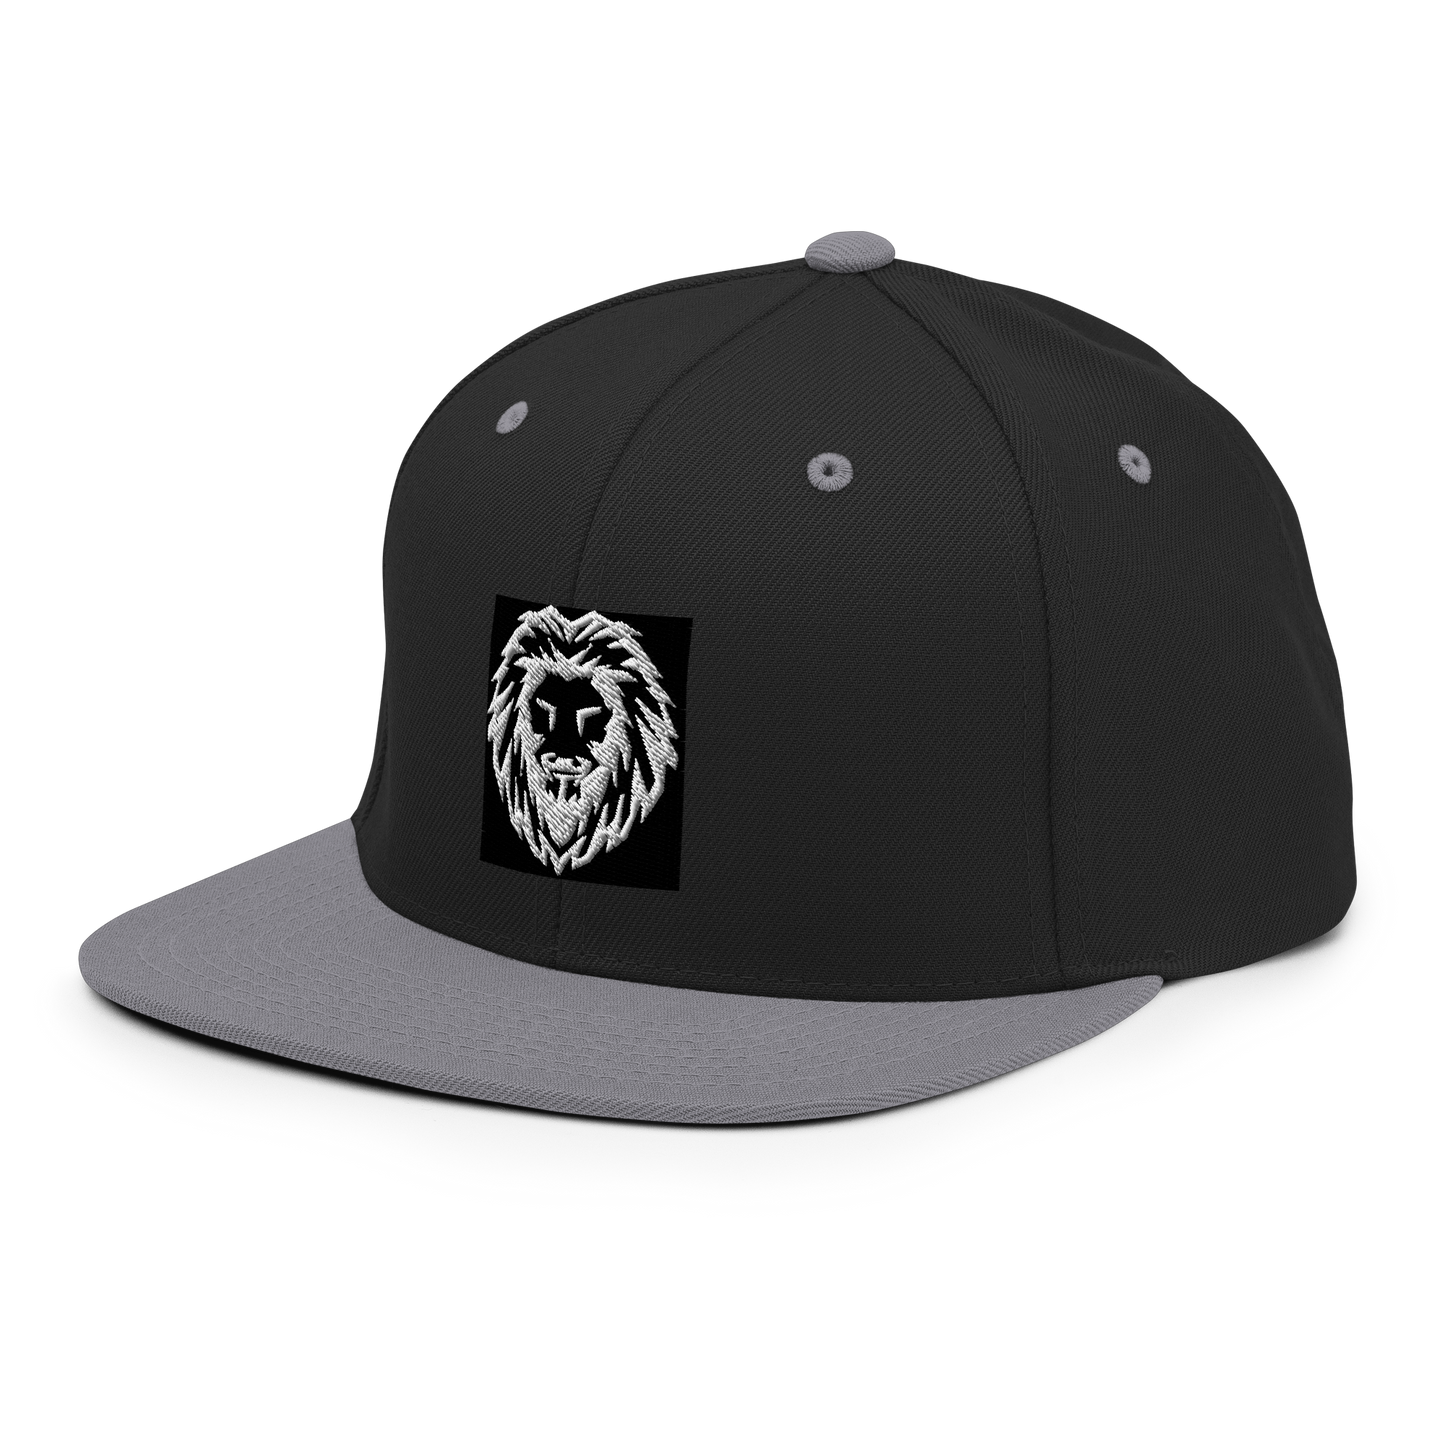 Snapback Hat black grey